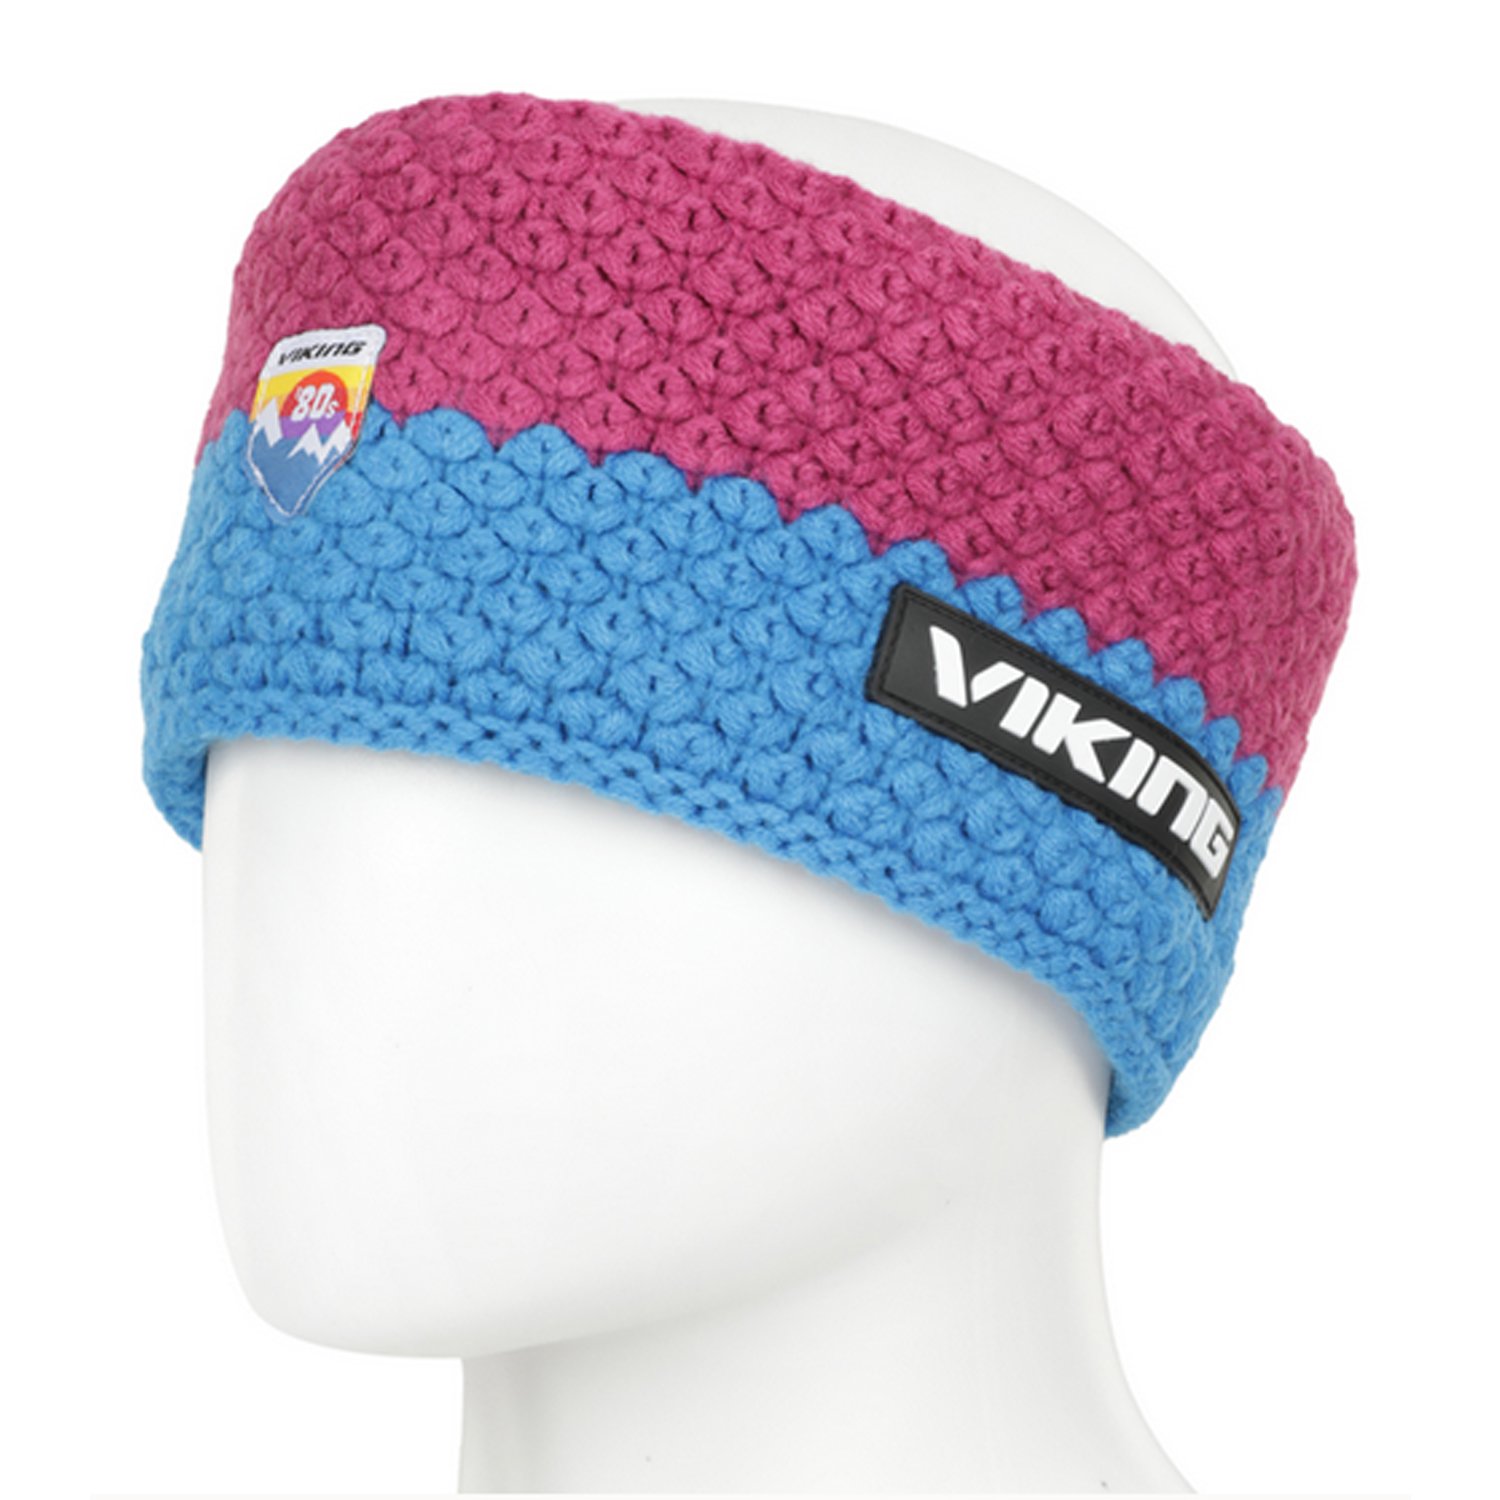 Повязка VIKING Headband Riddle Multicolour, US:one size, голубой/фиолетовый, 2022-23, 210/24/8752_1546, цвет разноцветная УТ-00334959 - фото 2